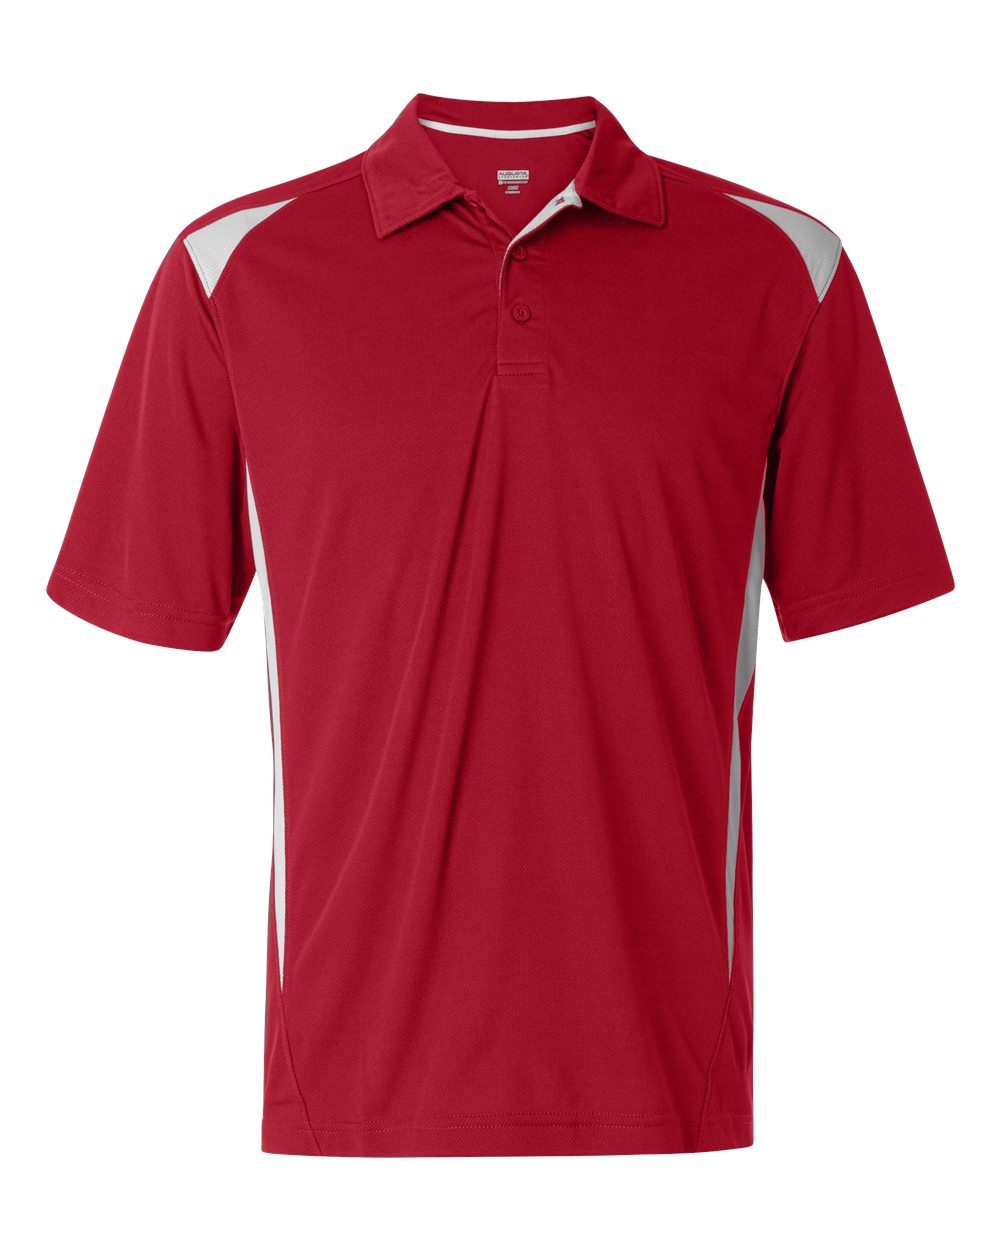 Augusta Mens Sportswear Two-Tone Premier Sport Shirt 5012 up to 3XL | eBay